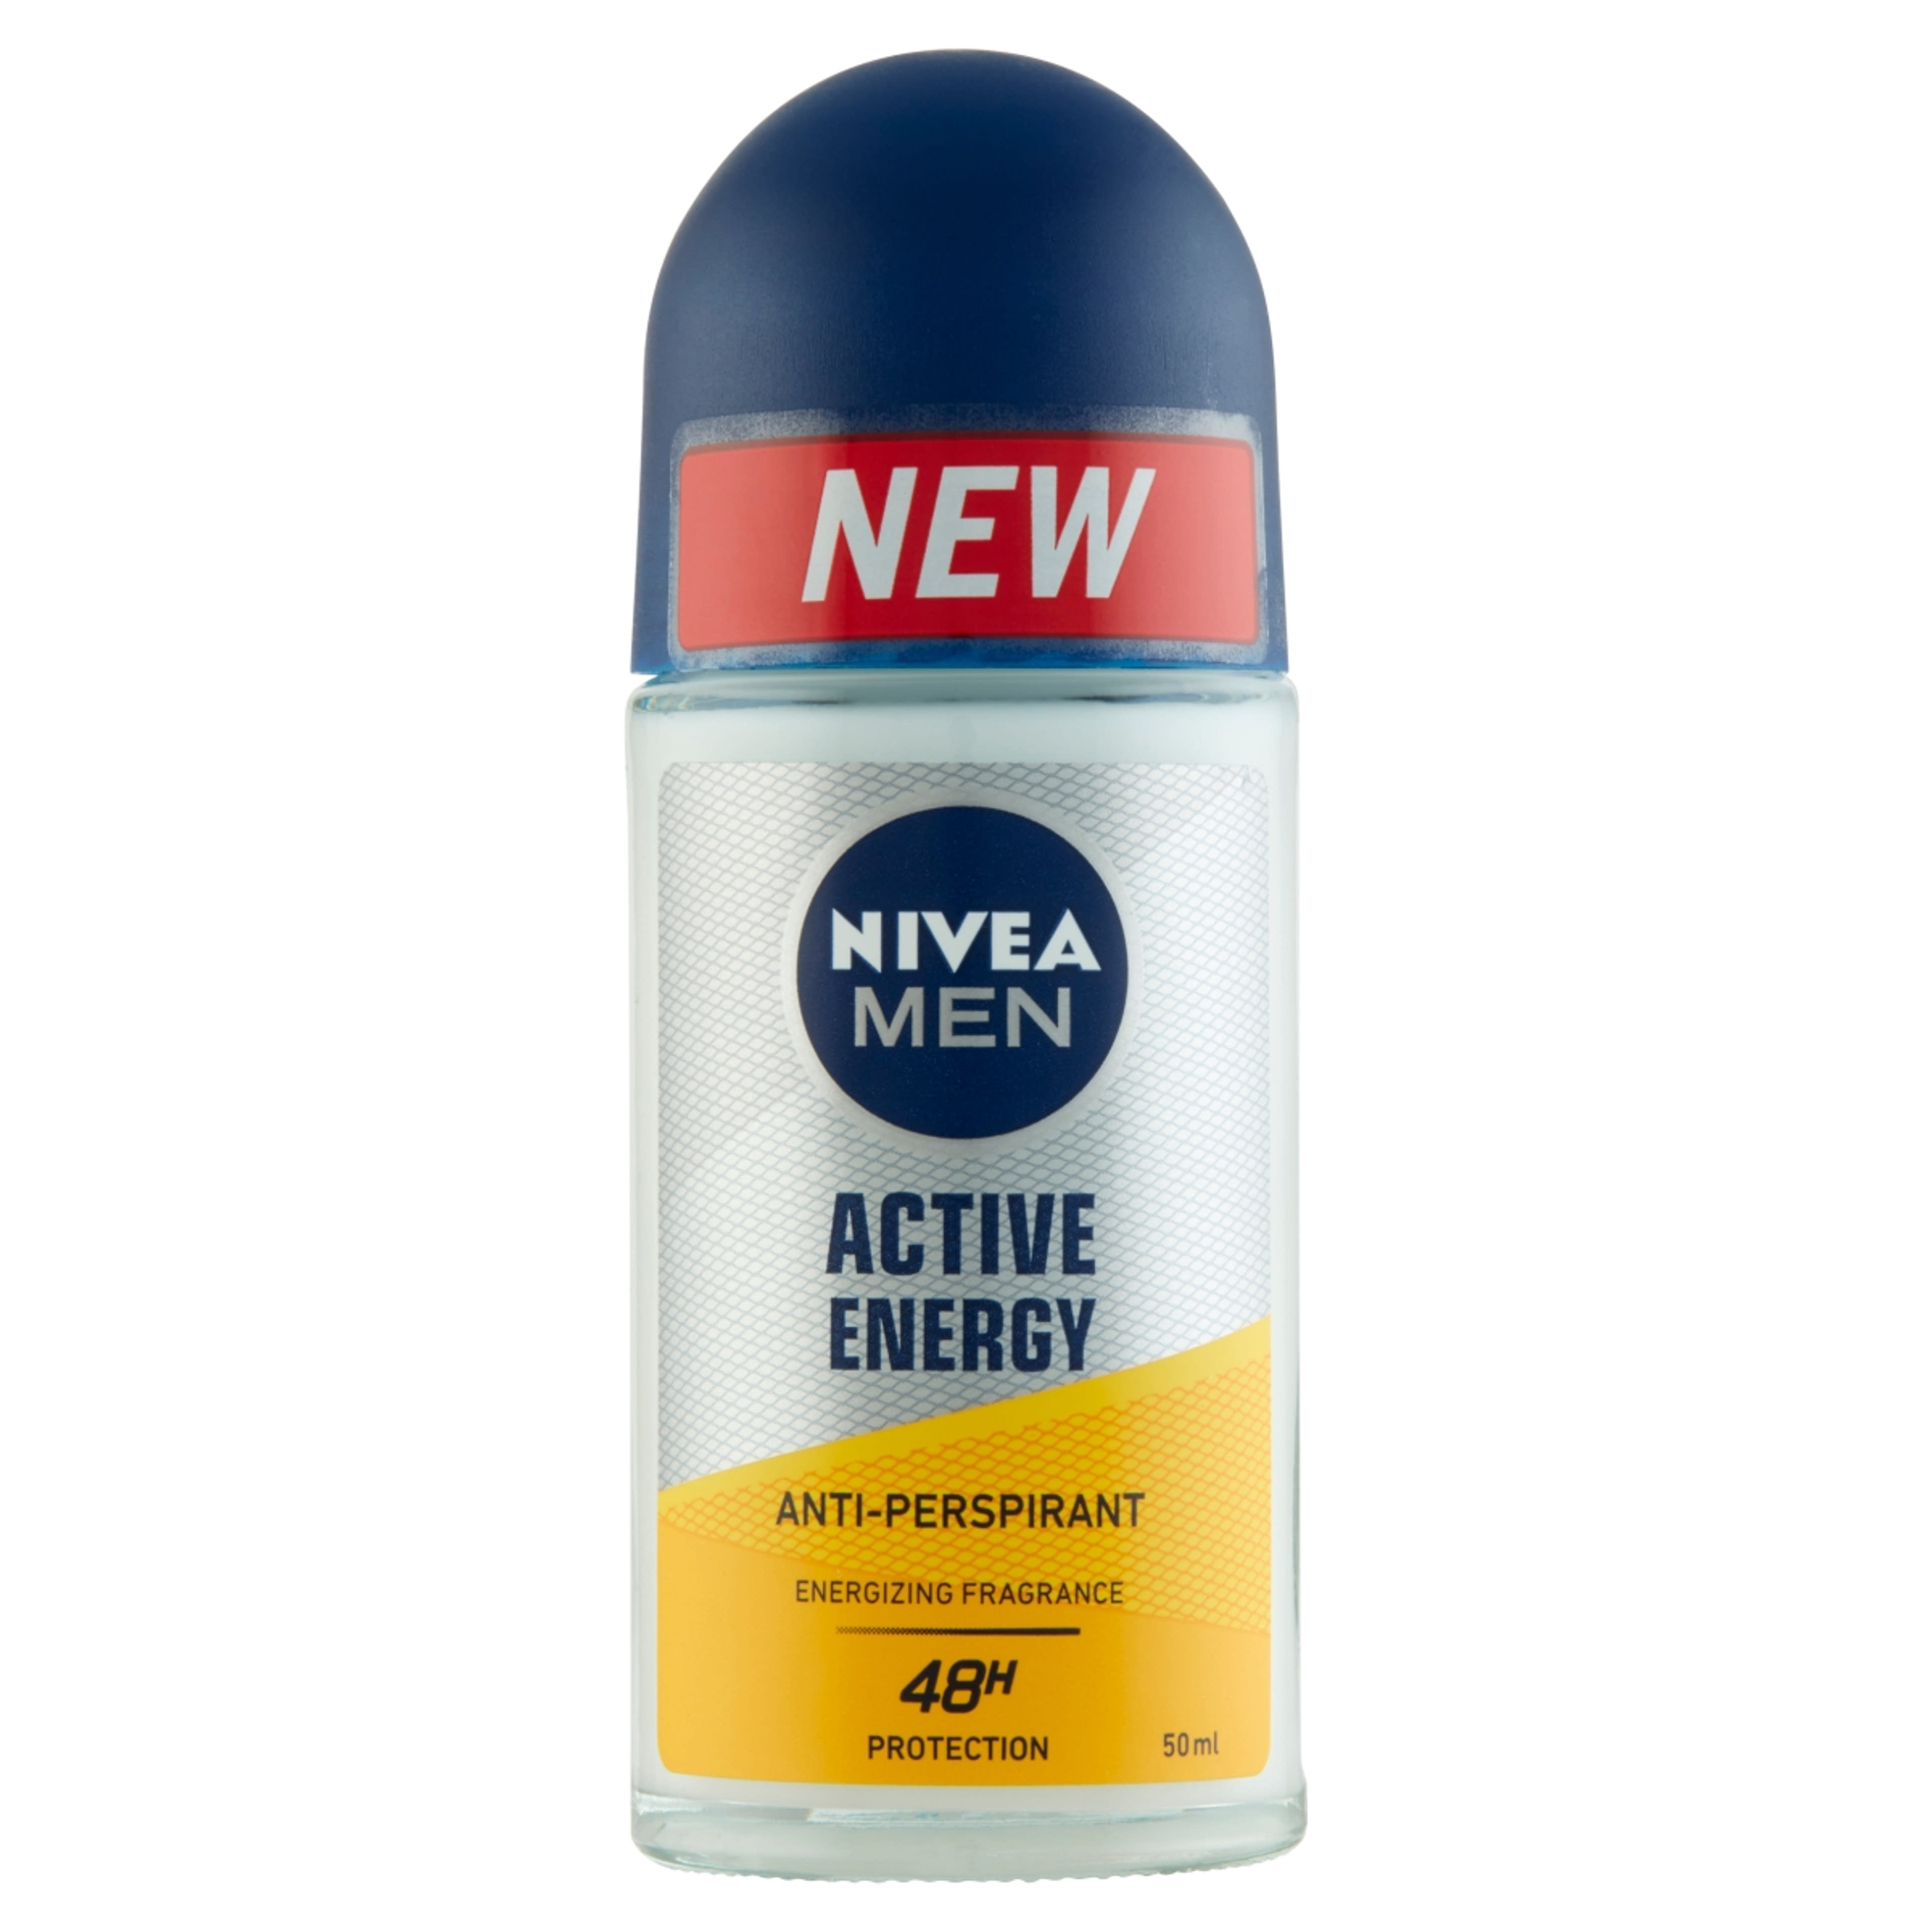 NIVEA MEN roll-on active energy - 50 ml-1